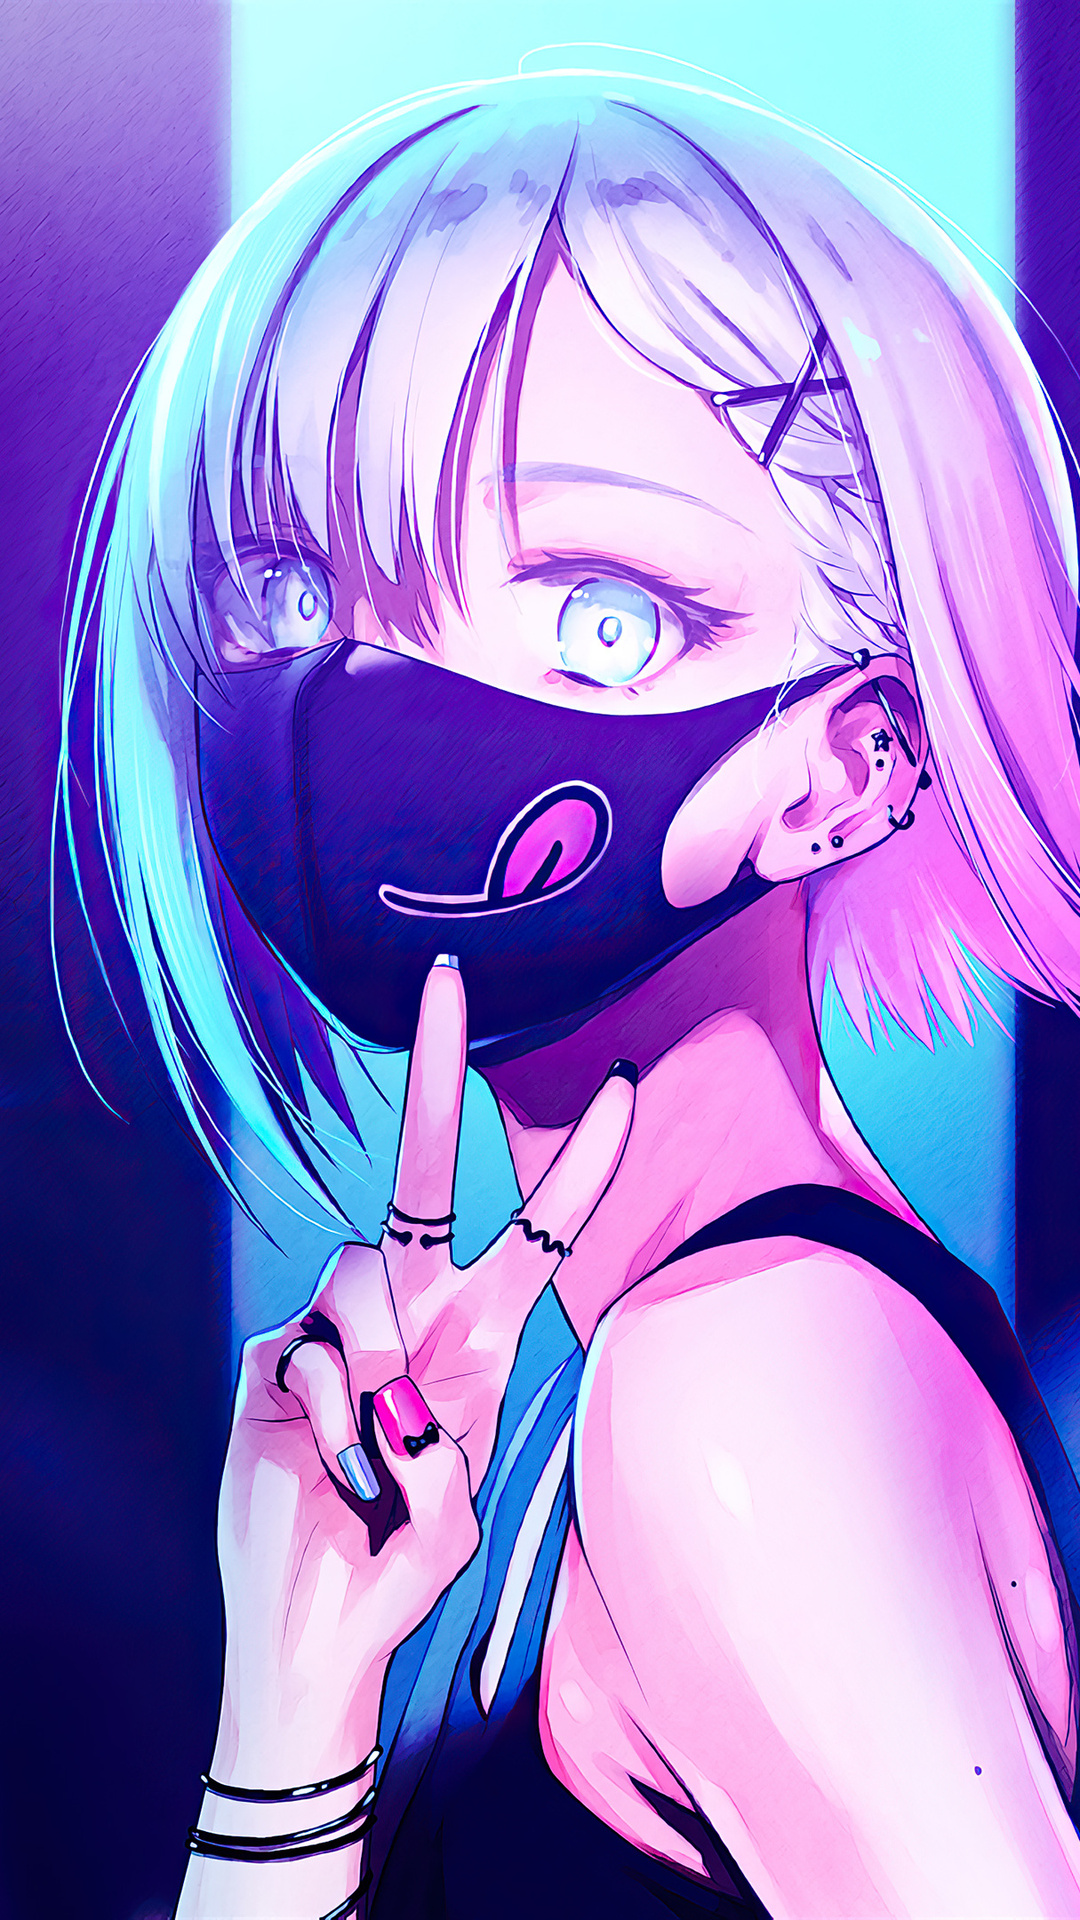 1080x1920 Anime Girl City Lights Neon Face Mask 4k Iphone 7,6s,6 Plus